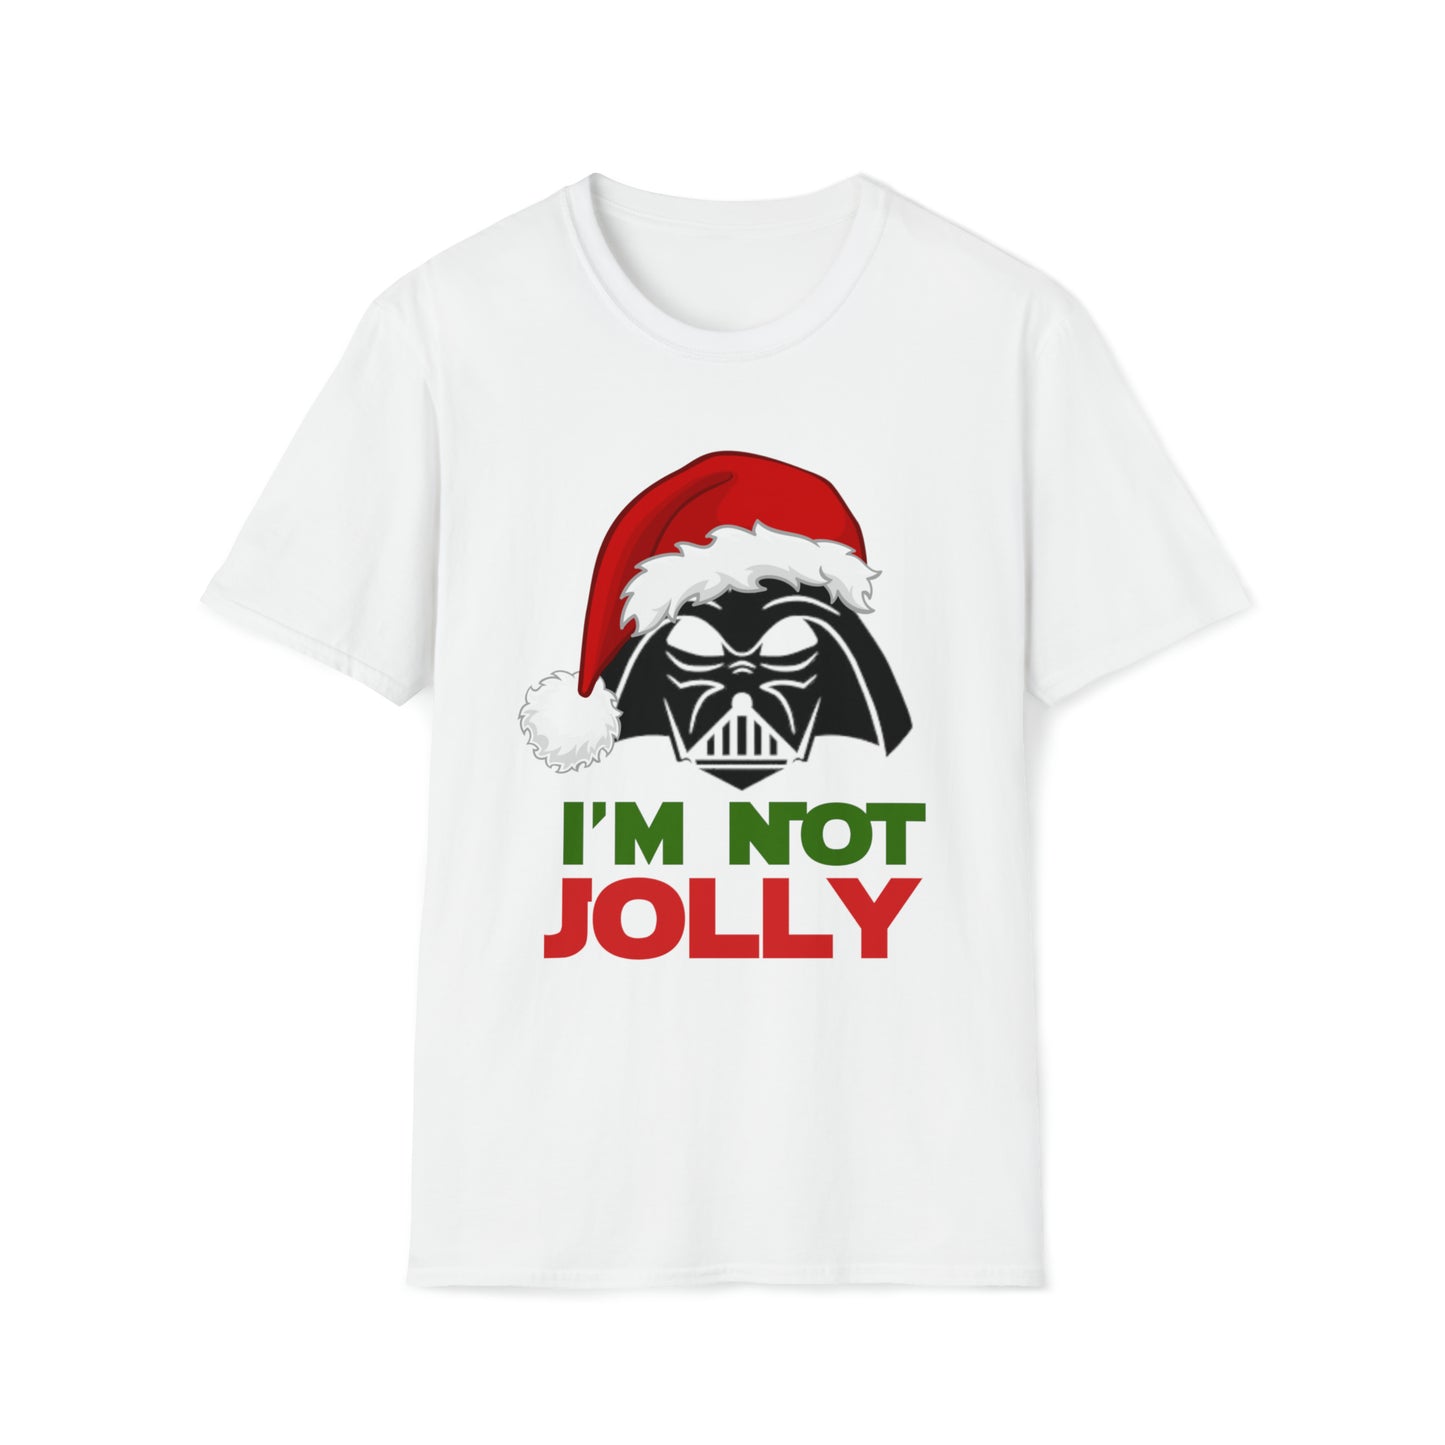 I’m not jolly Darth Vader - Unisex Softstyle T-Shirt